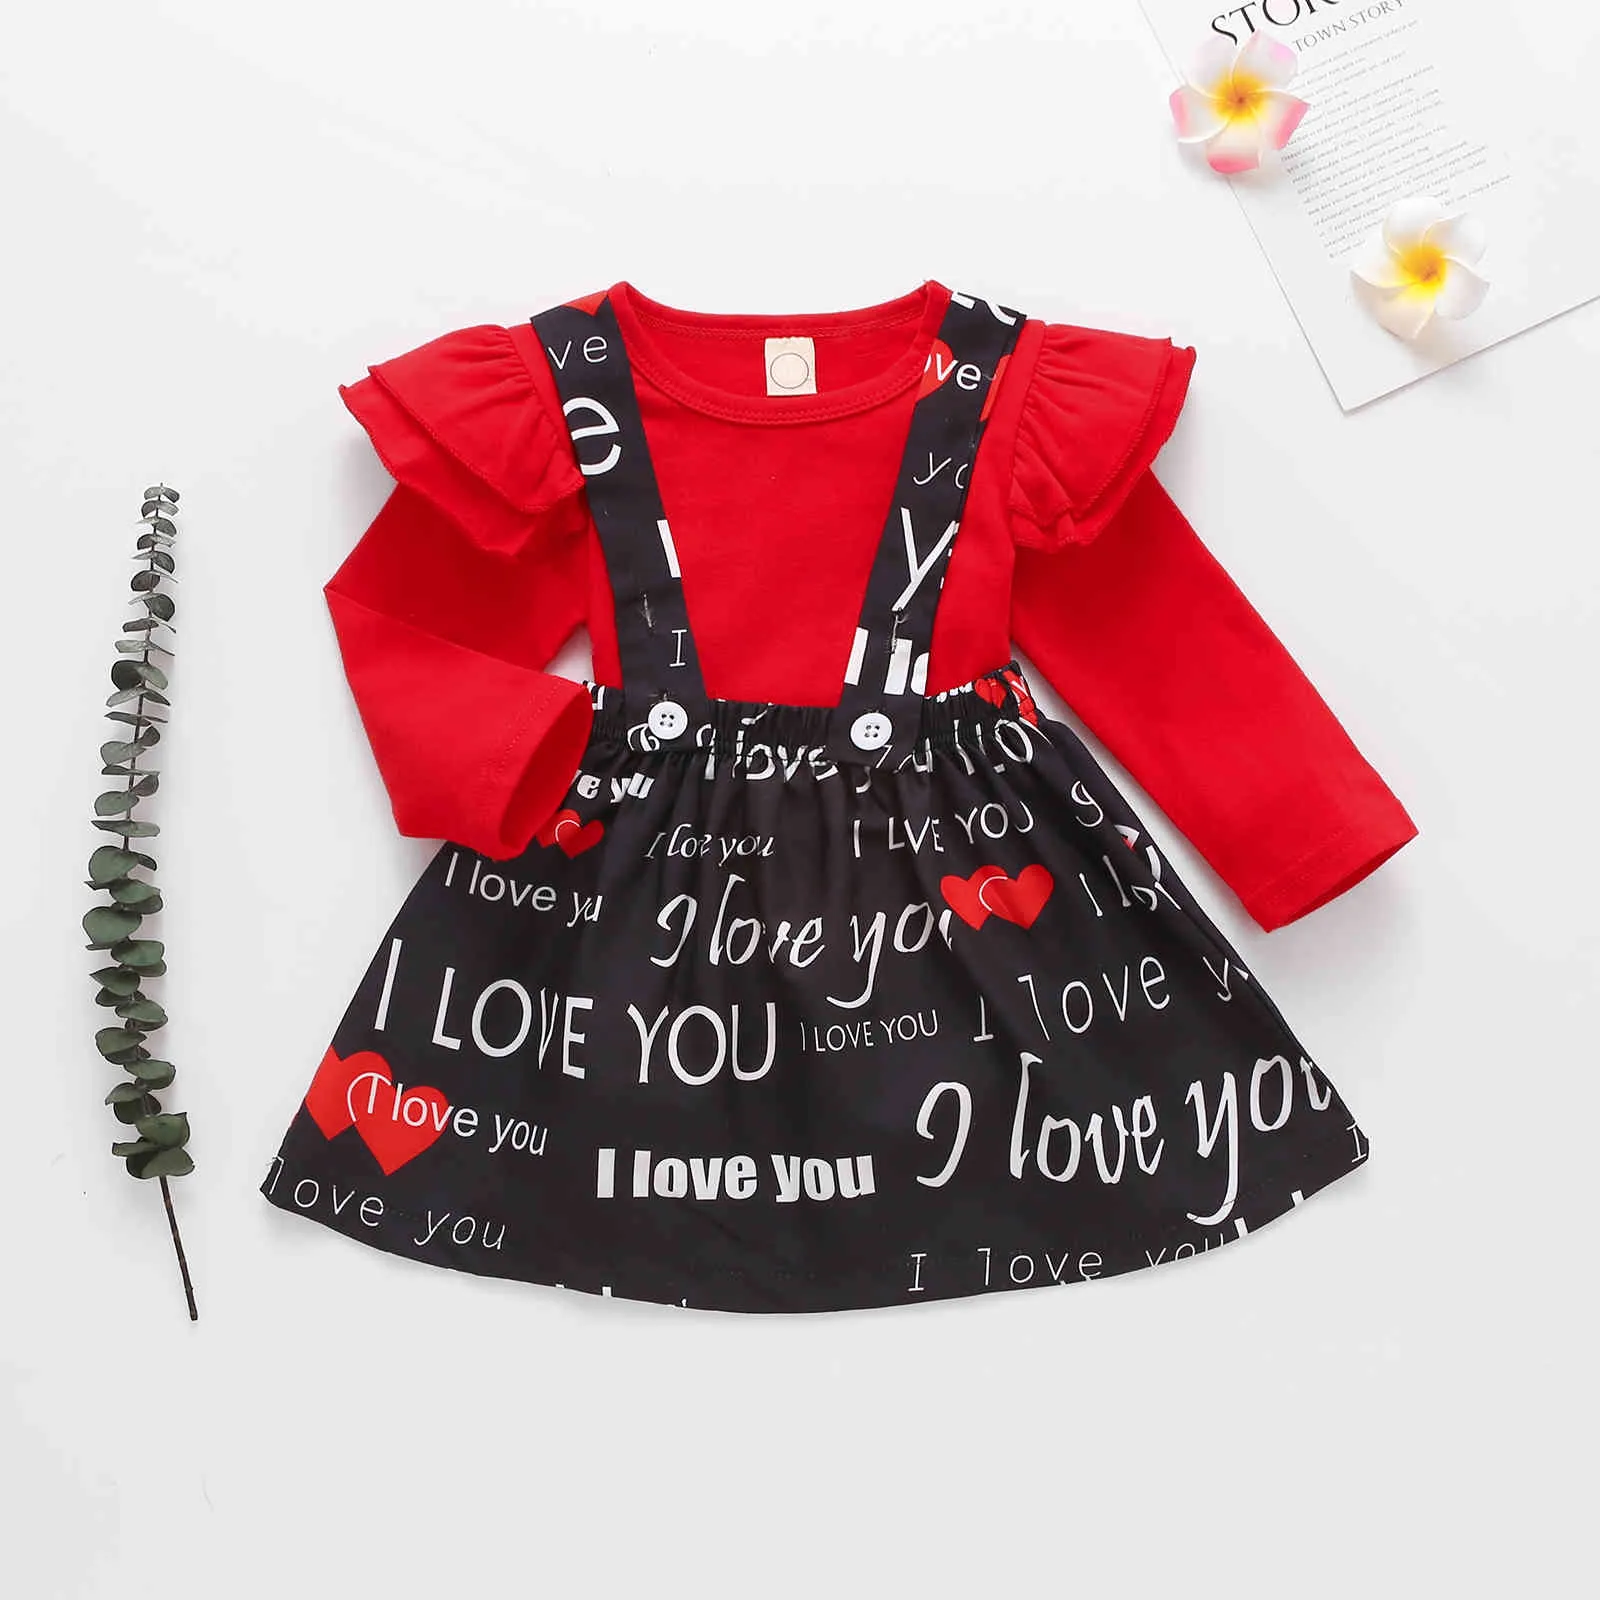 6m-4y día de San Valentín niño niño bebé niño niña ropa roja ropa ruffles manga larga camiseta amor letra falda outfit 210515